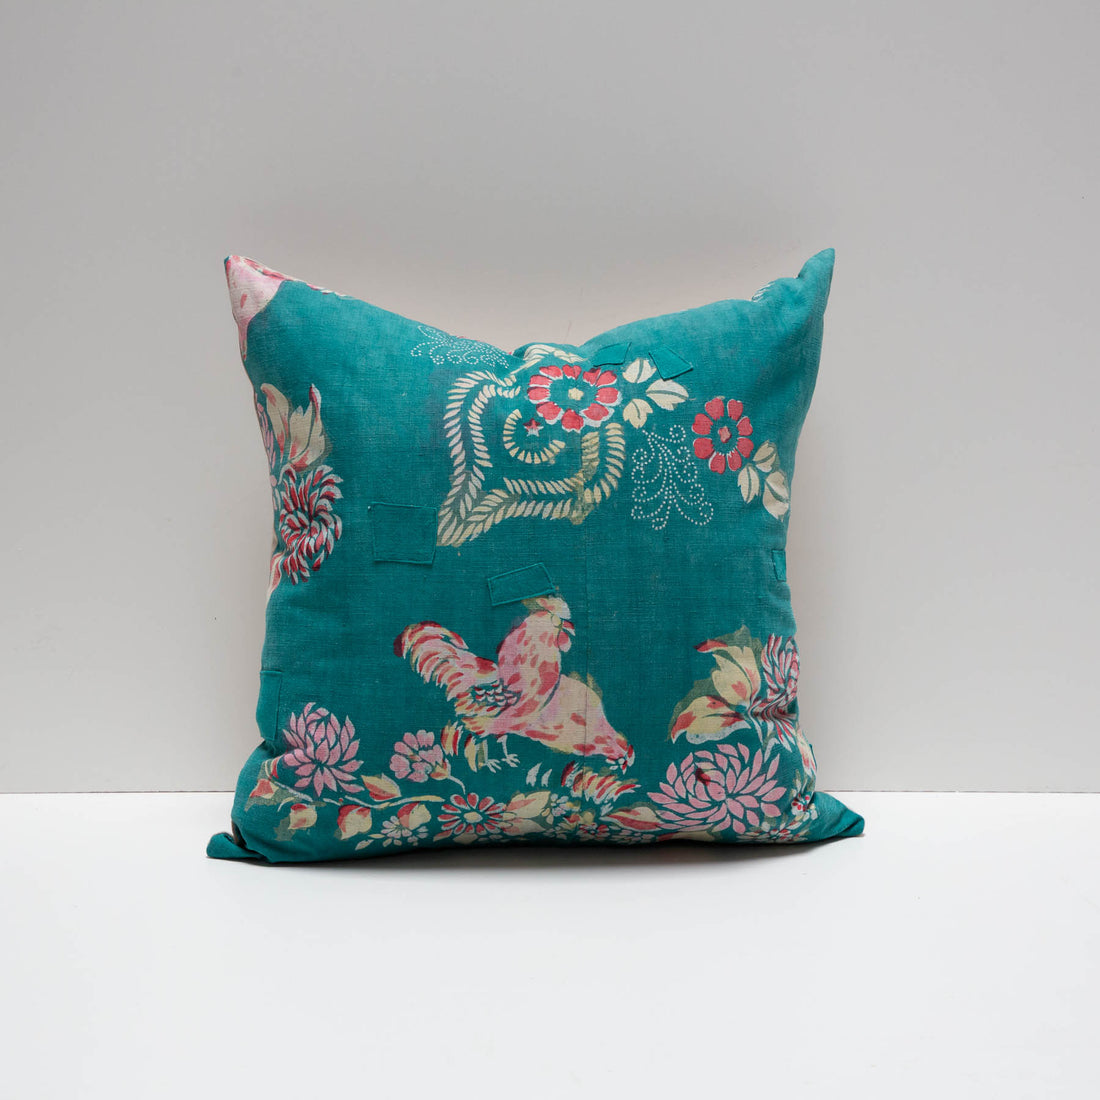 Vintage Pillow - Teal Floral